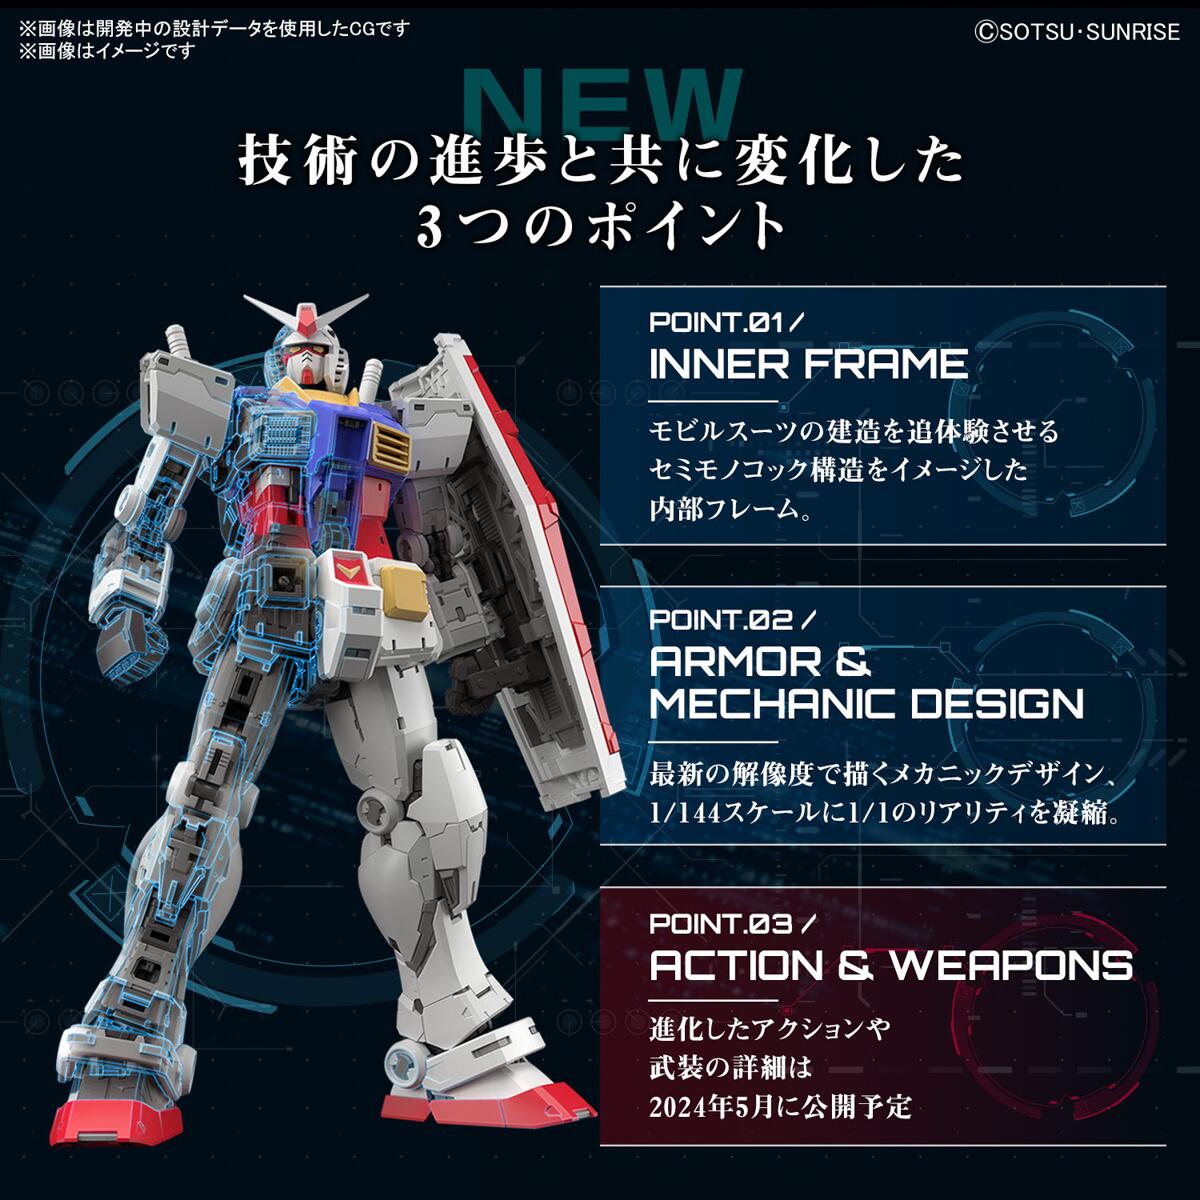 RG 1/144 Rx-78-2 Gundam Ver.2.0 - Gunpla San